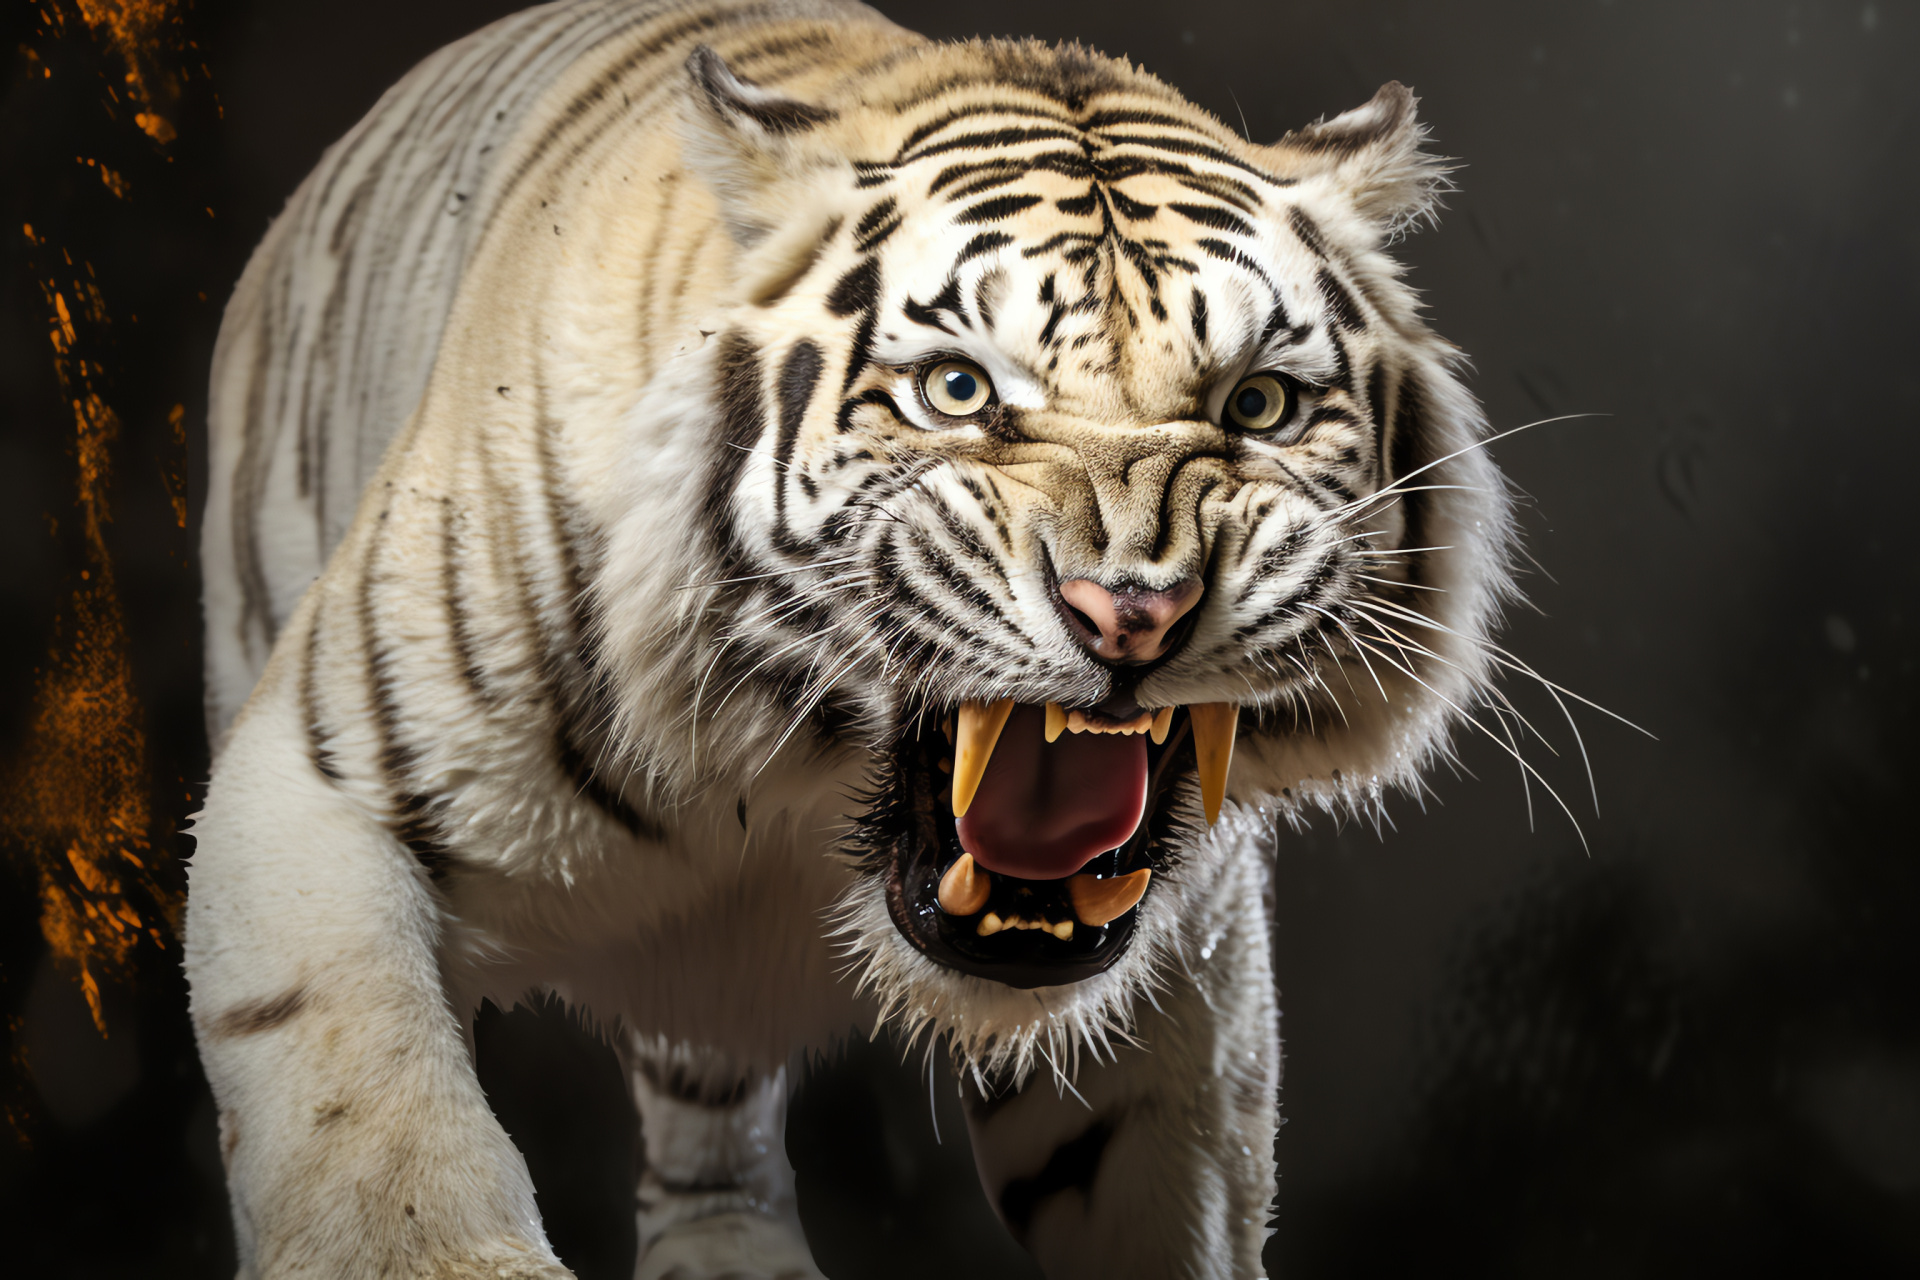 Saber Tooth Tiger, extinct predator, piercing yellow eyes, fierce appearance, Pleistocene epoch, HD Desktop Image